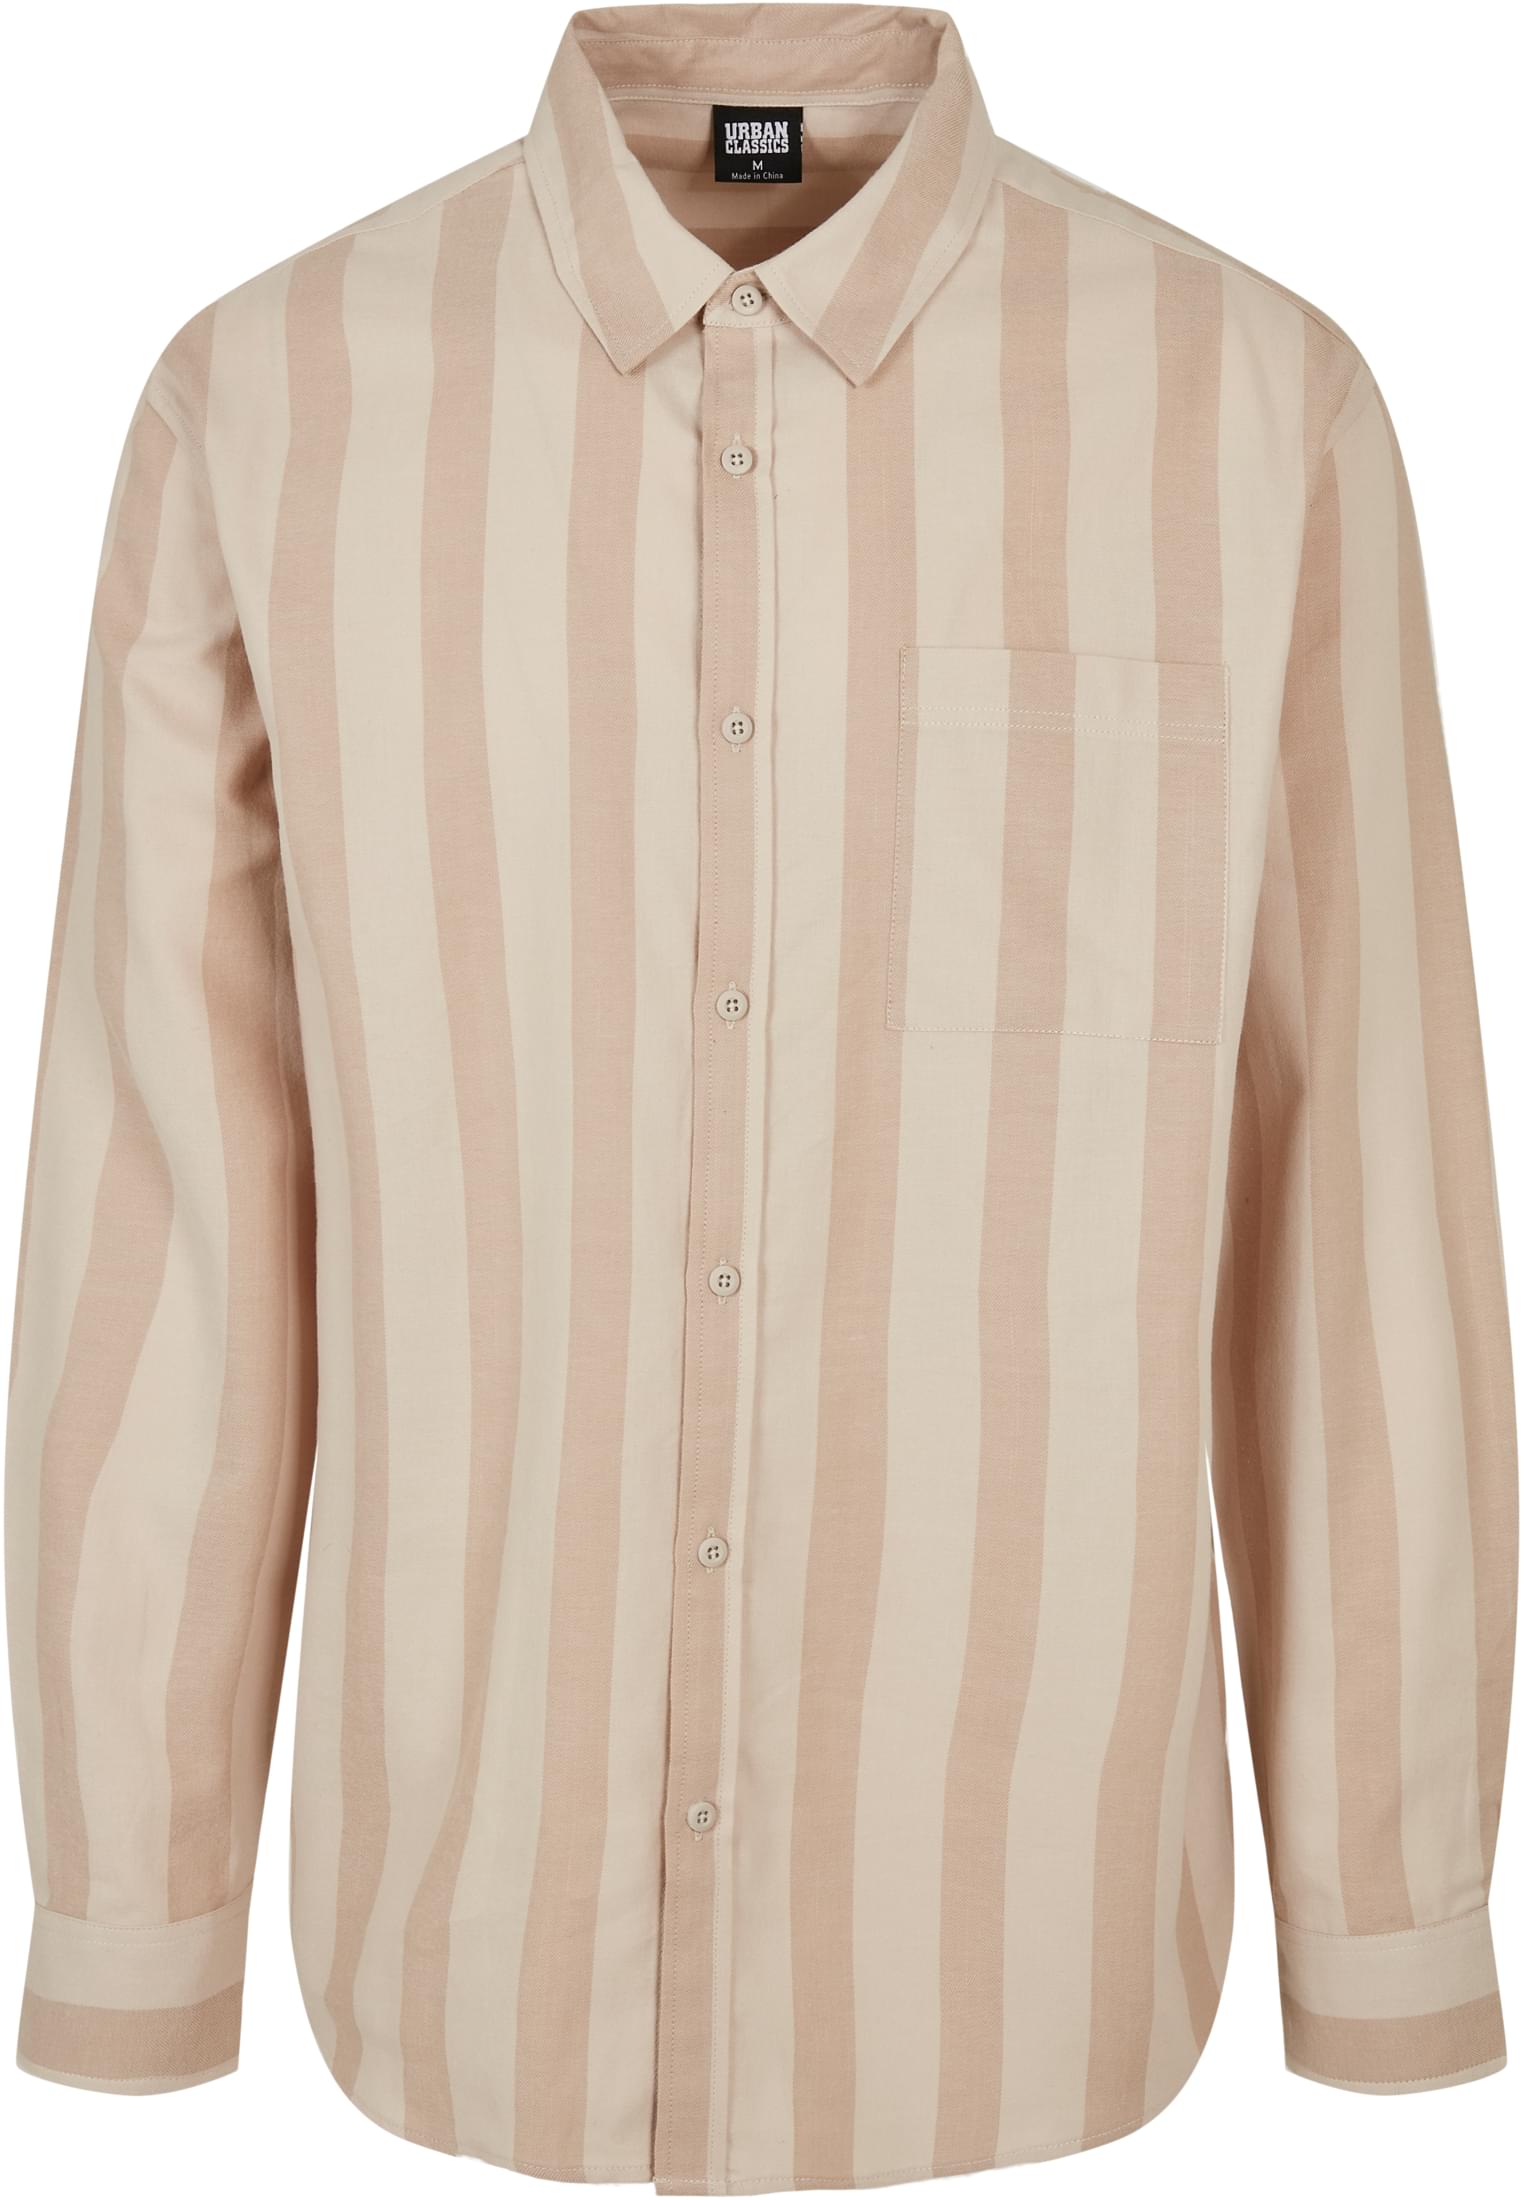 Hemden Striped Shirt in Farbe unionbeige/softseagrass